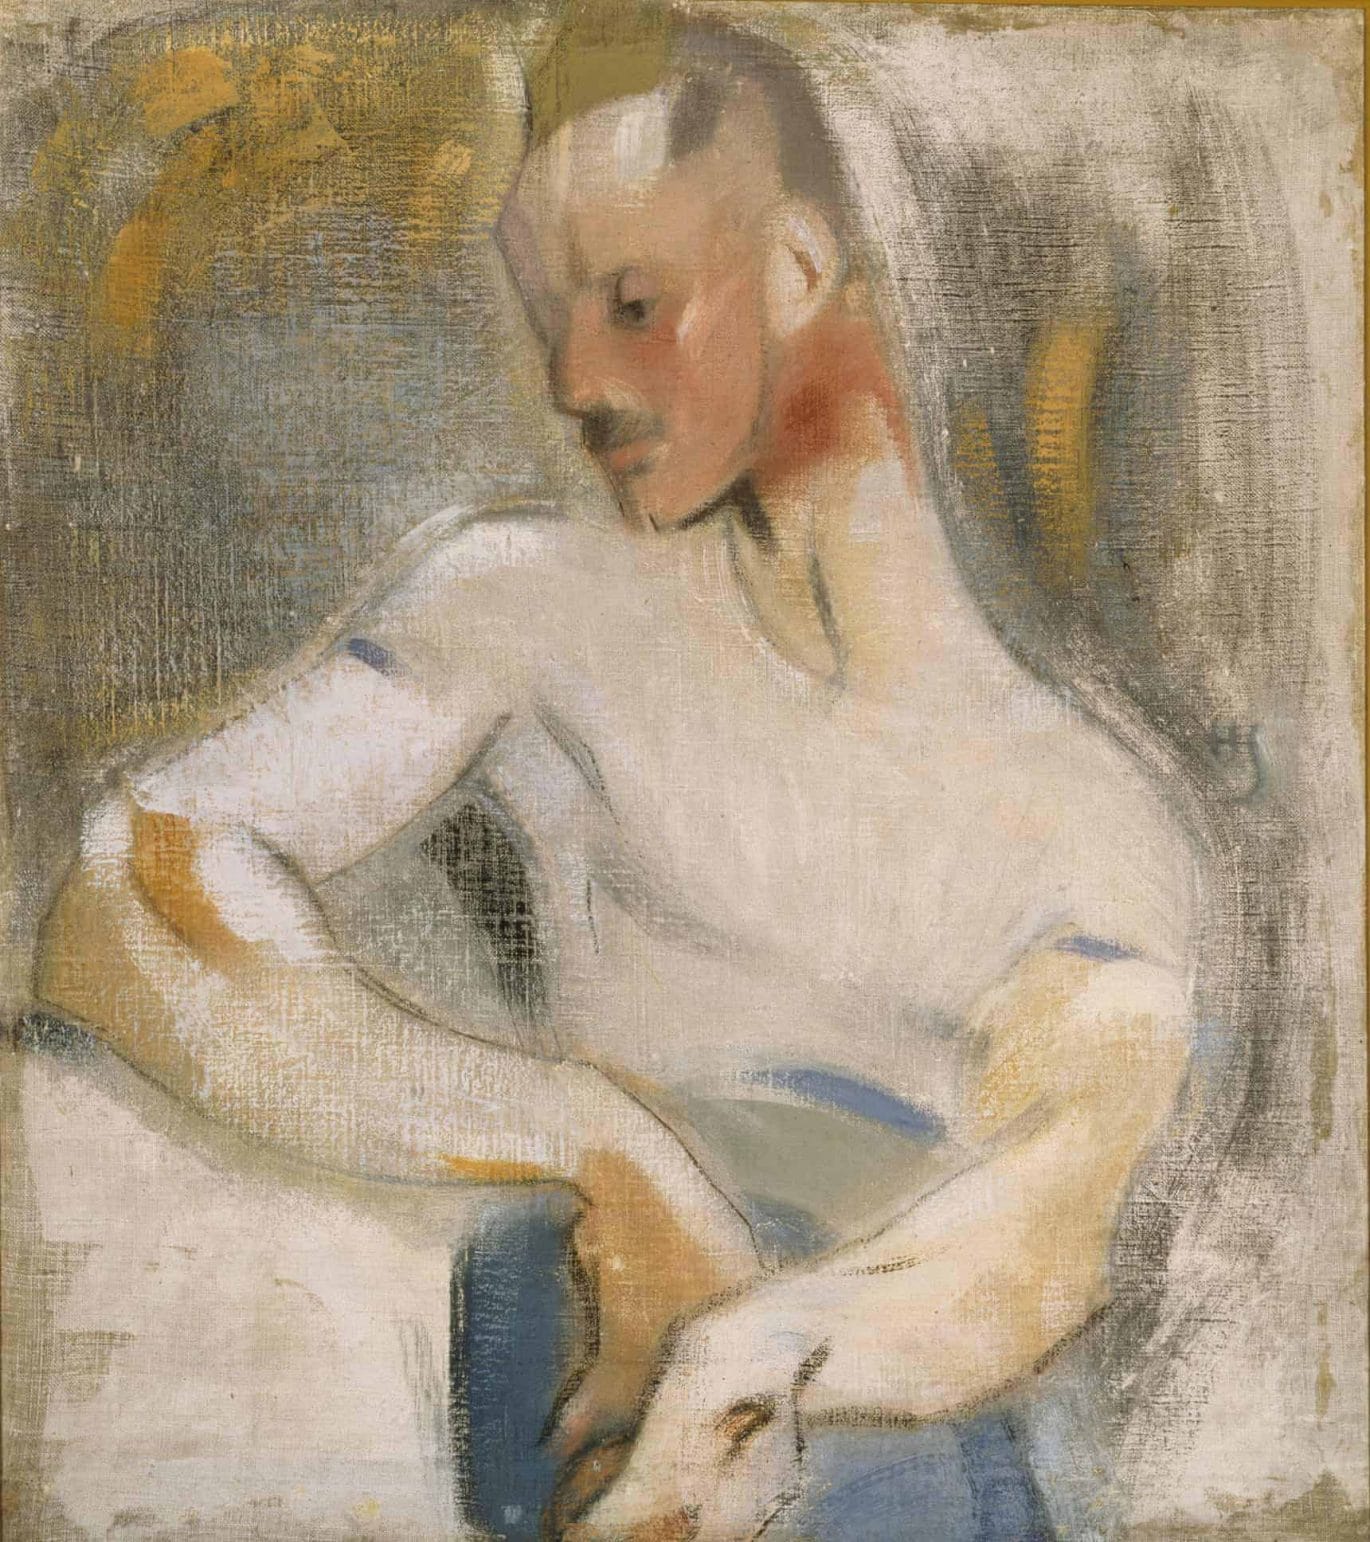 Helene Schjerfbeck, The Sailor (Einar Reuter), 1918. Photograph: Finnish National Gallery